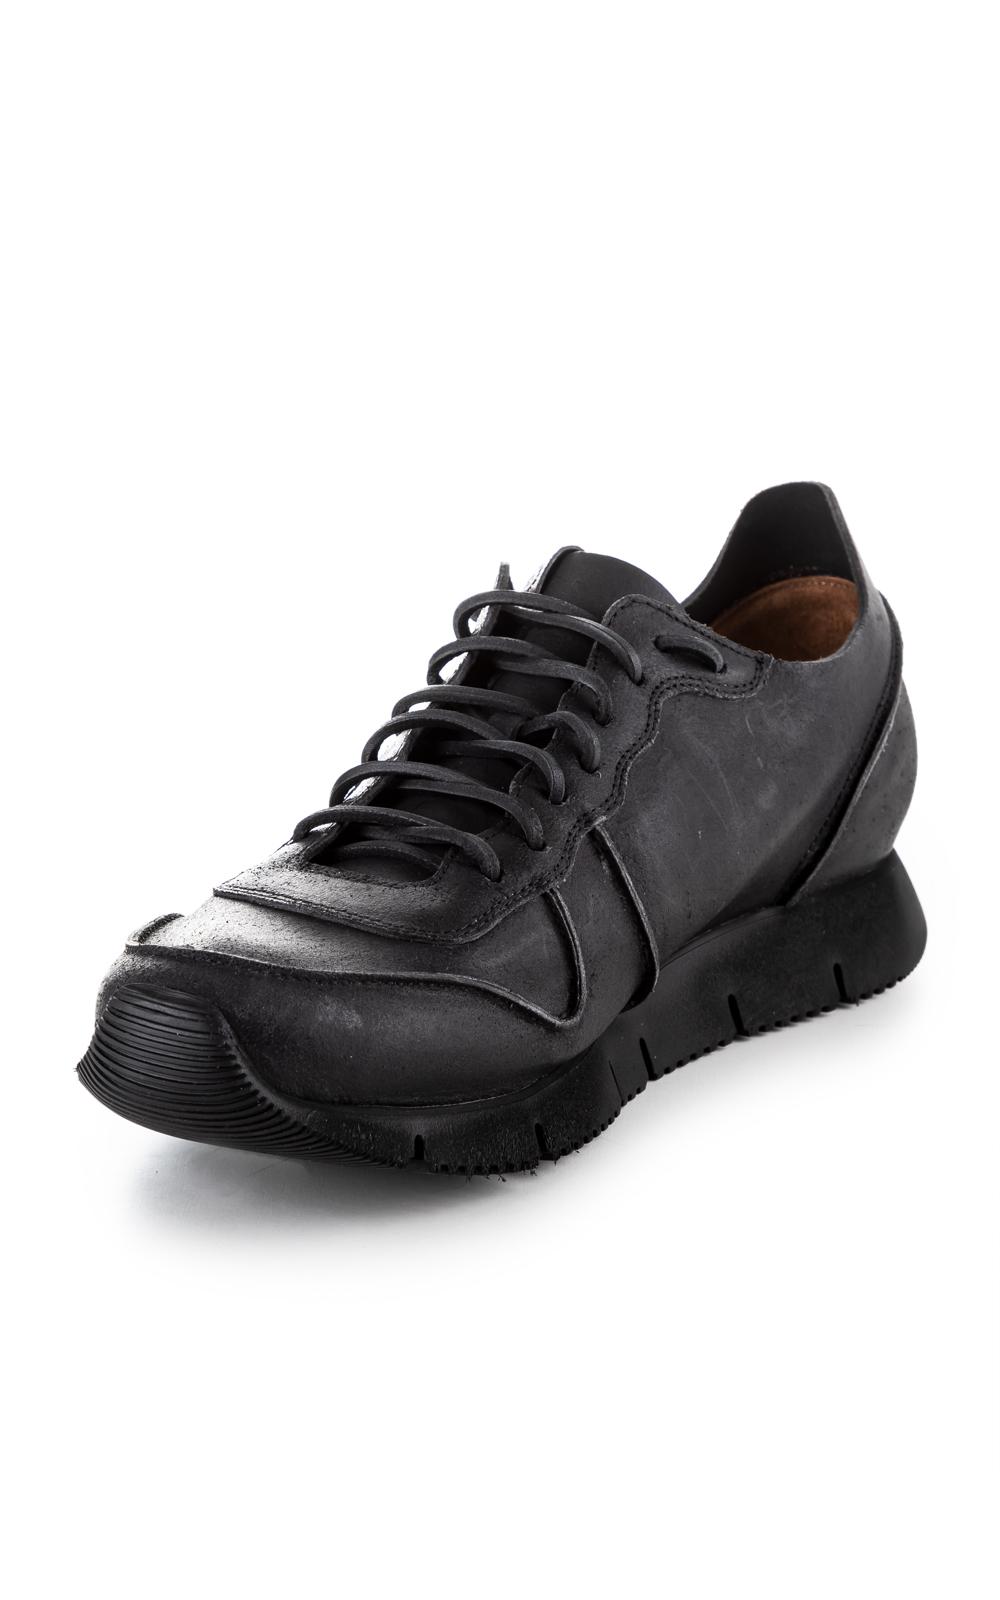 Buttero Leather B5910 Carrera Sneakers Crack Black/black for Men 